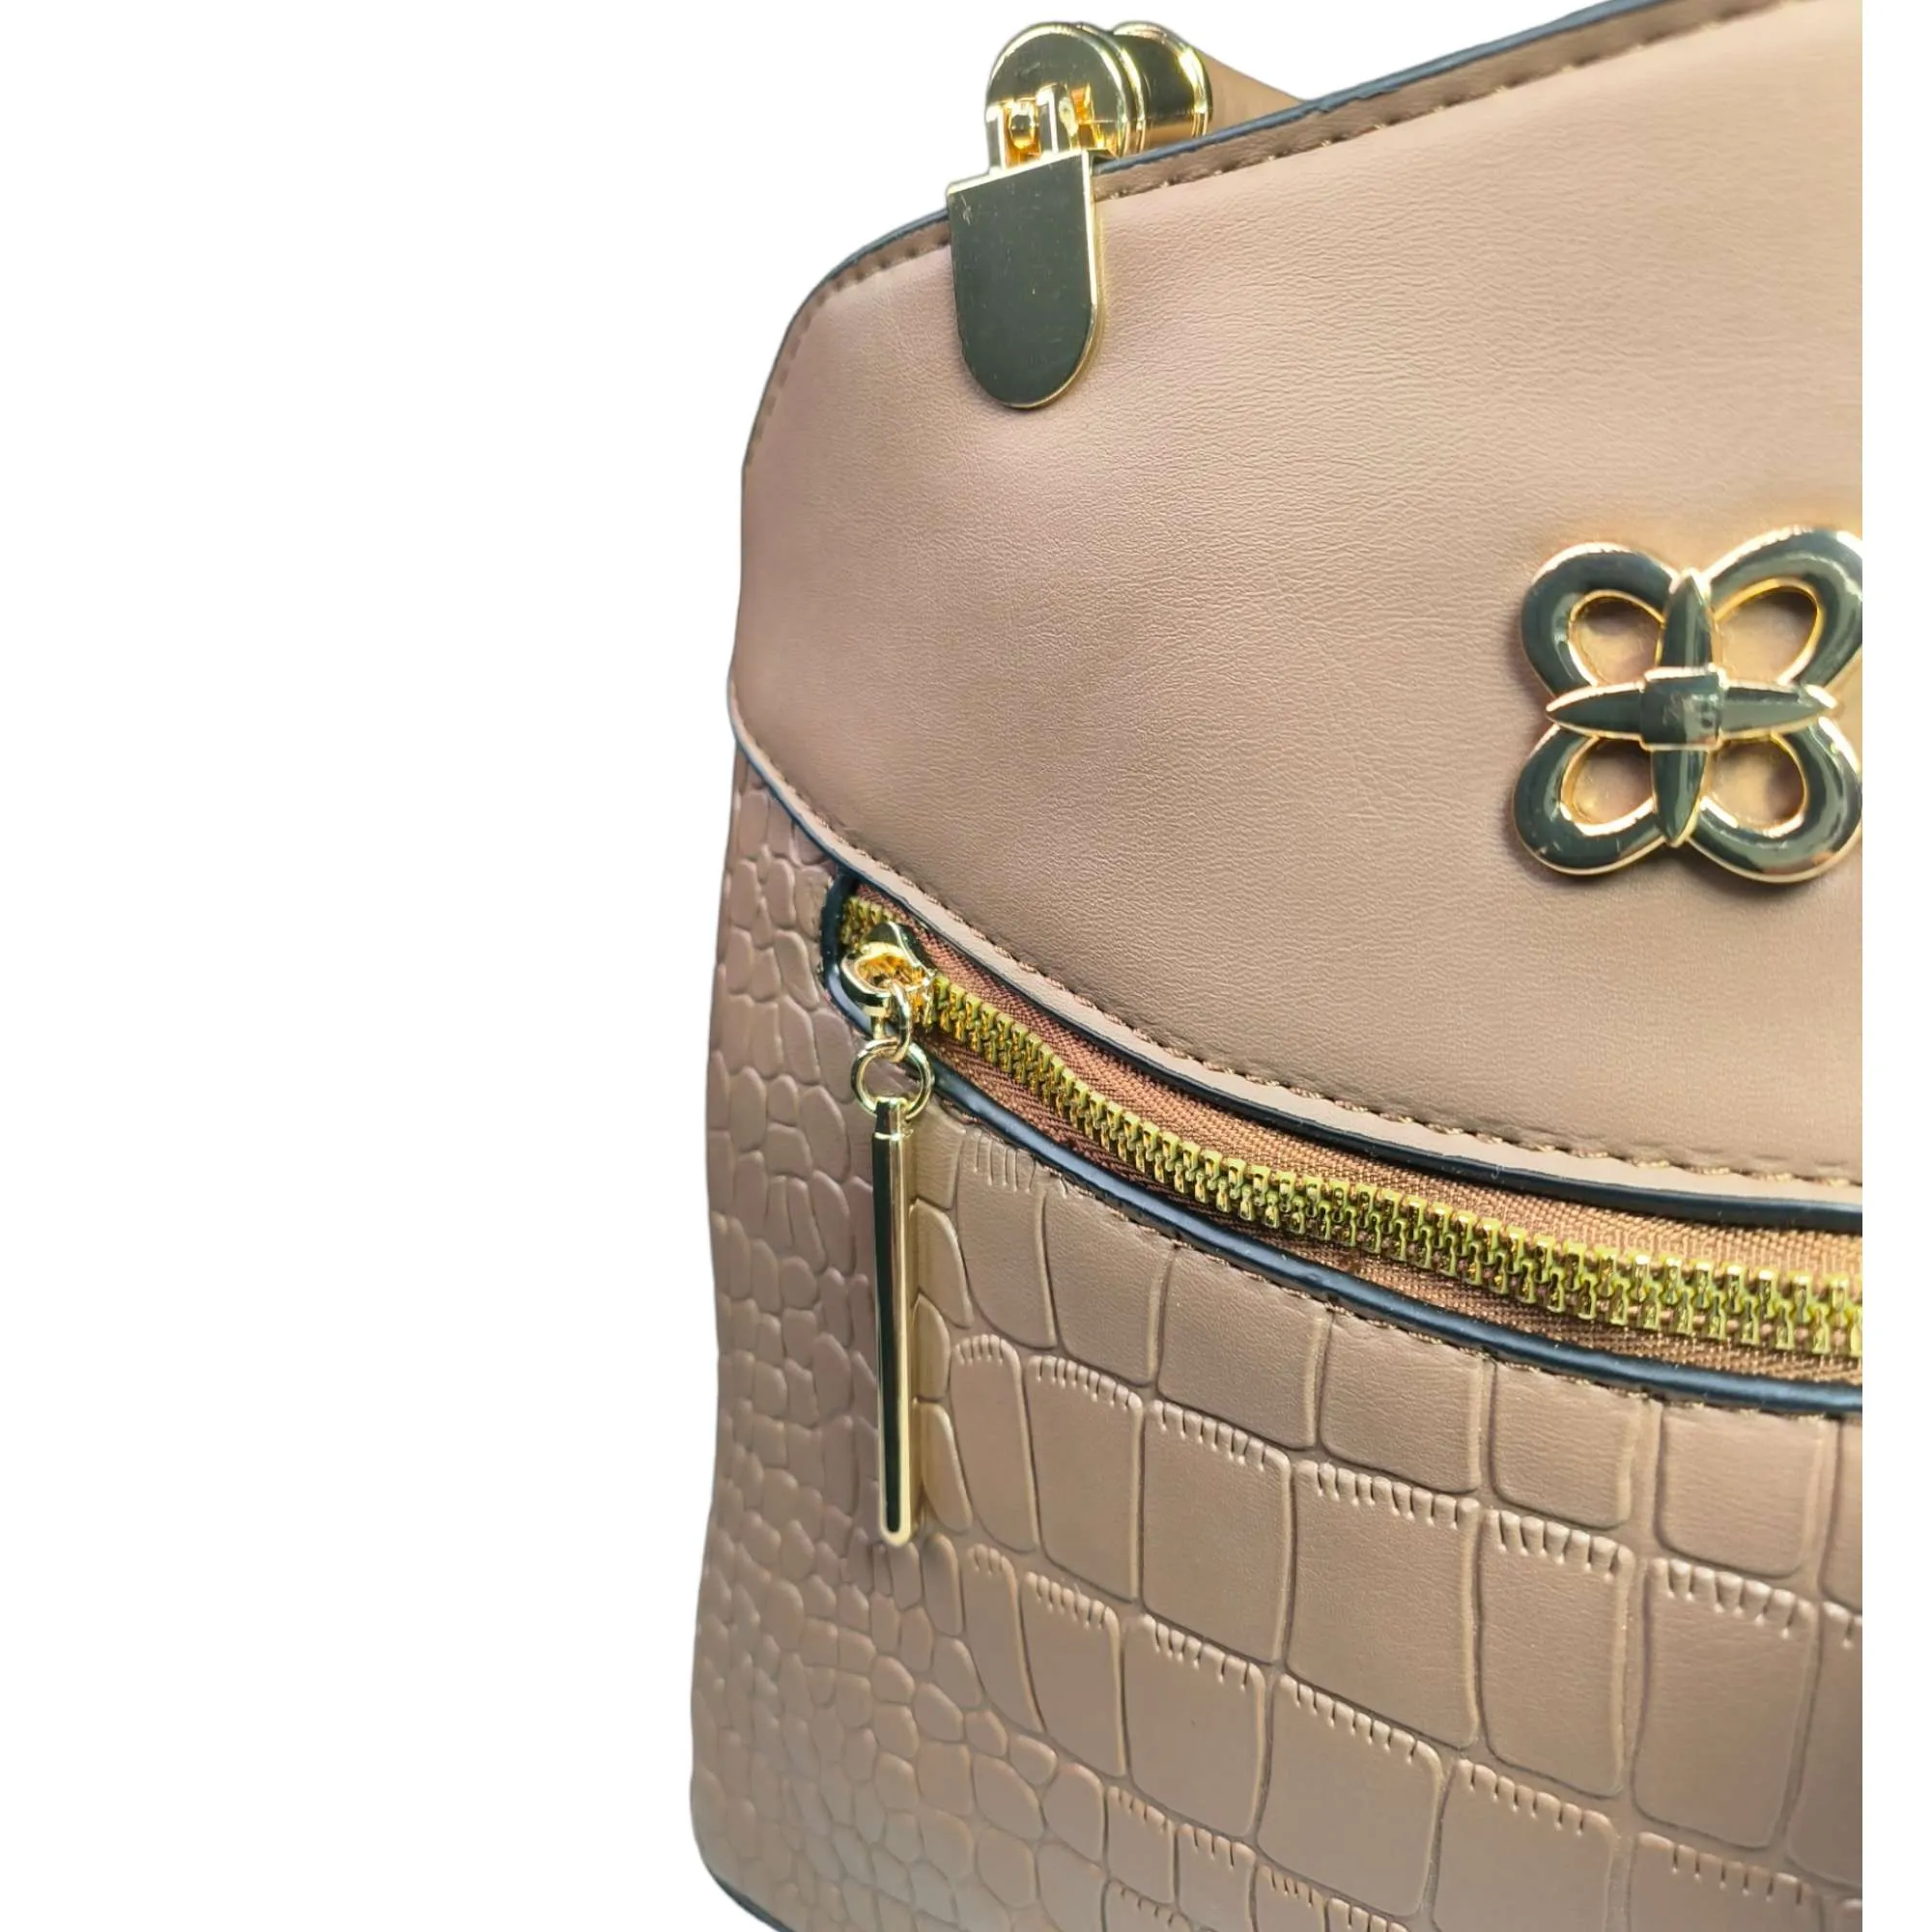 Italian Leather Croc Box-shaped Handbag-handcrafted Croc Leat90r  Crossbody-designer Leather Shoulder Bag Purse - Etsy